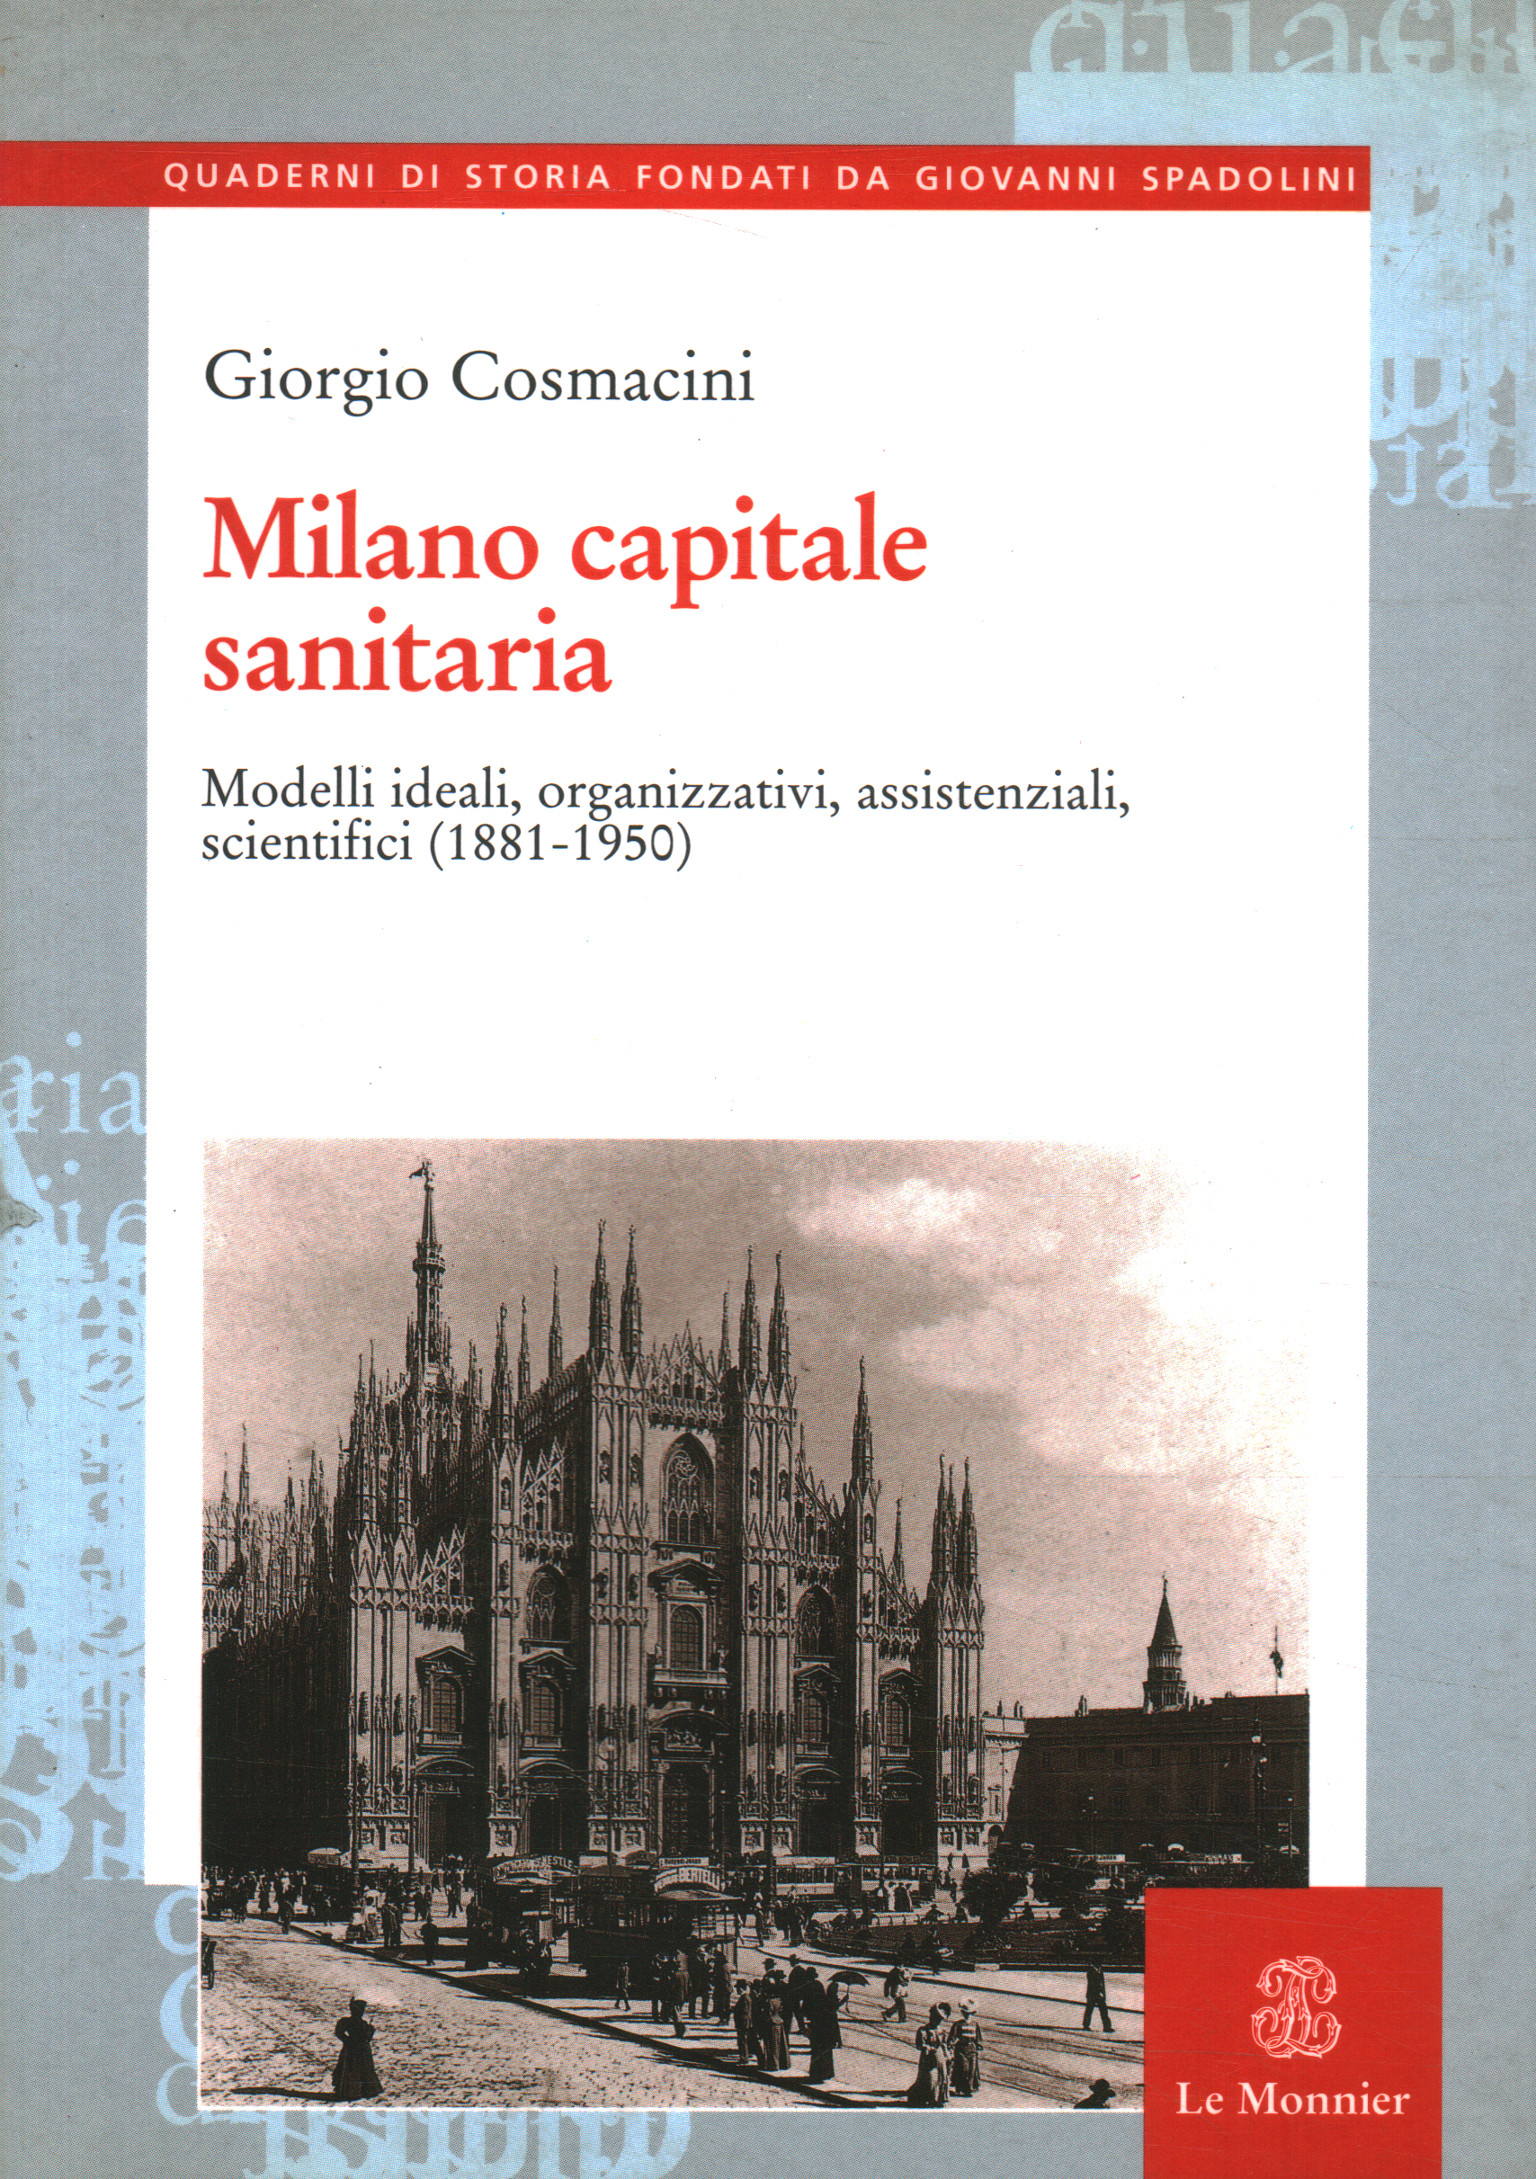 Milan health capital